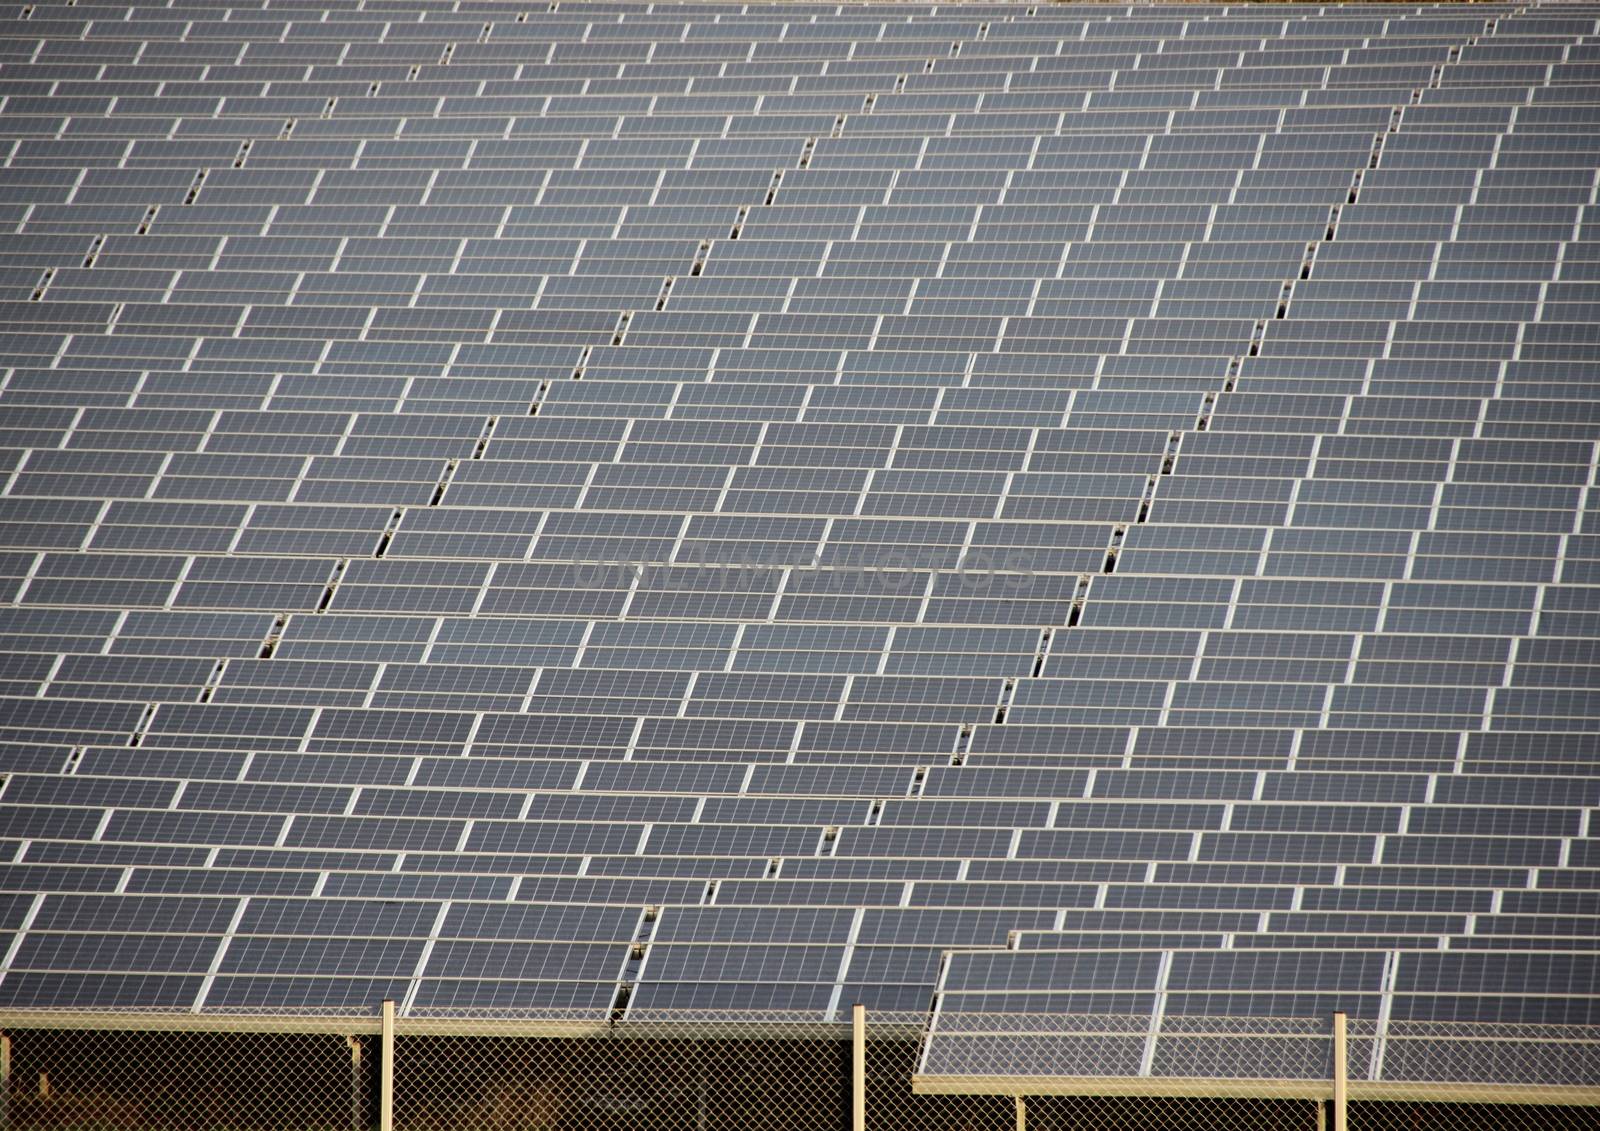 Sun Solar Industrial Plant Closeup with Fence by HoleInTheBox